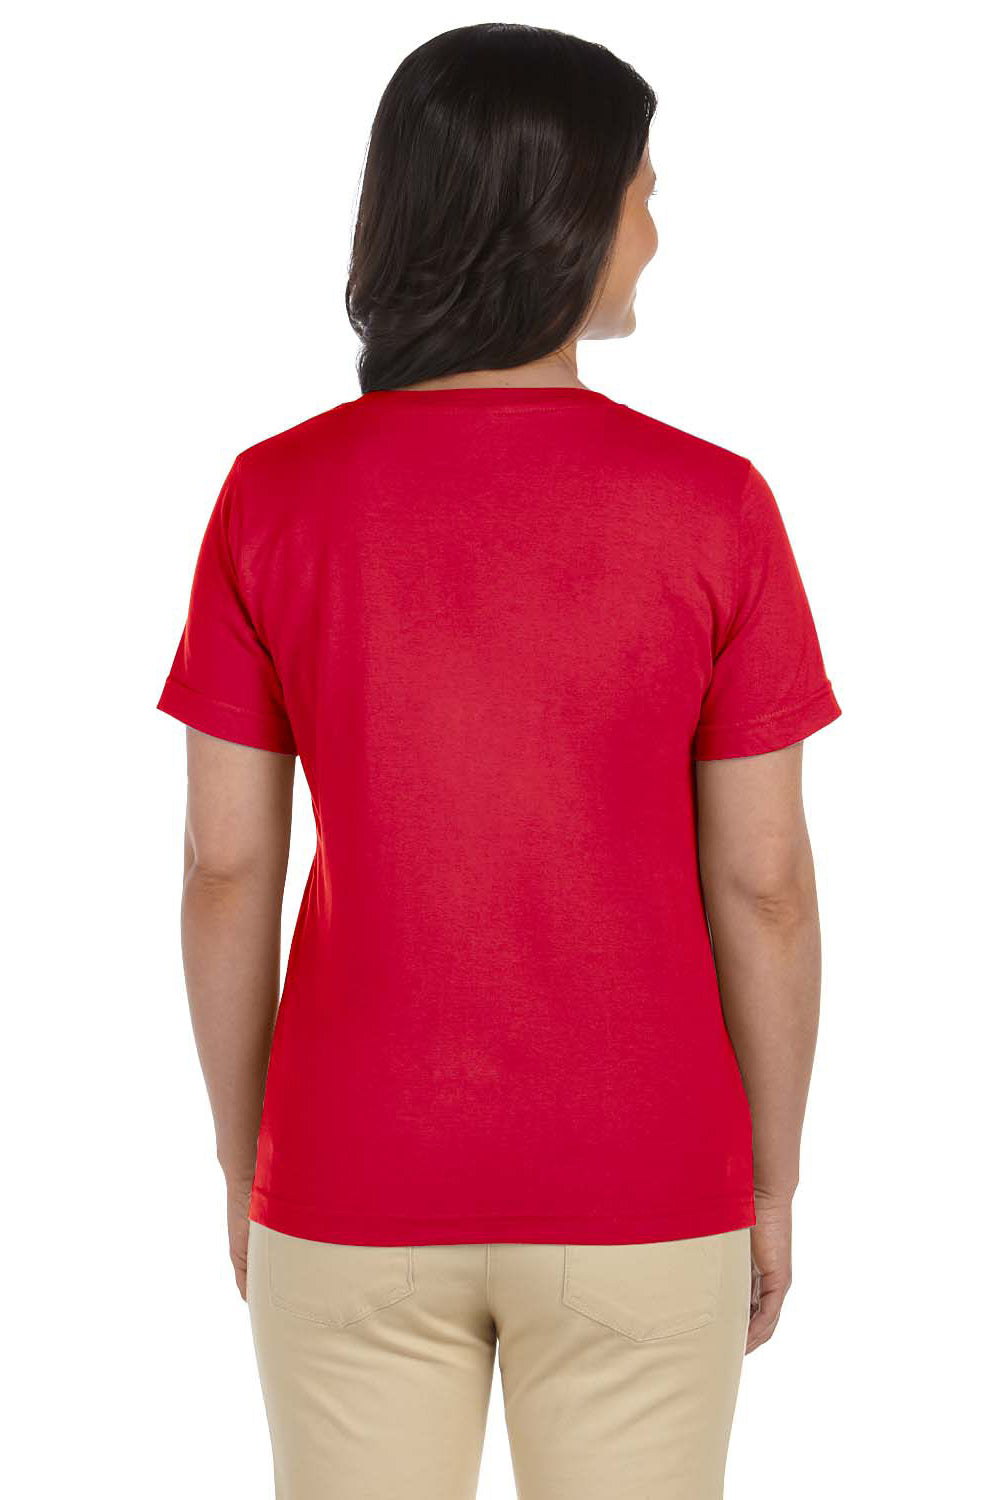 LAT L-3587 Womens Premium Jersey Short Sleeve V-Neck T-Shirt Red Back